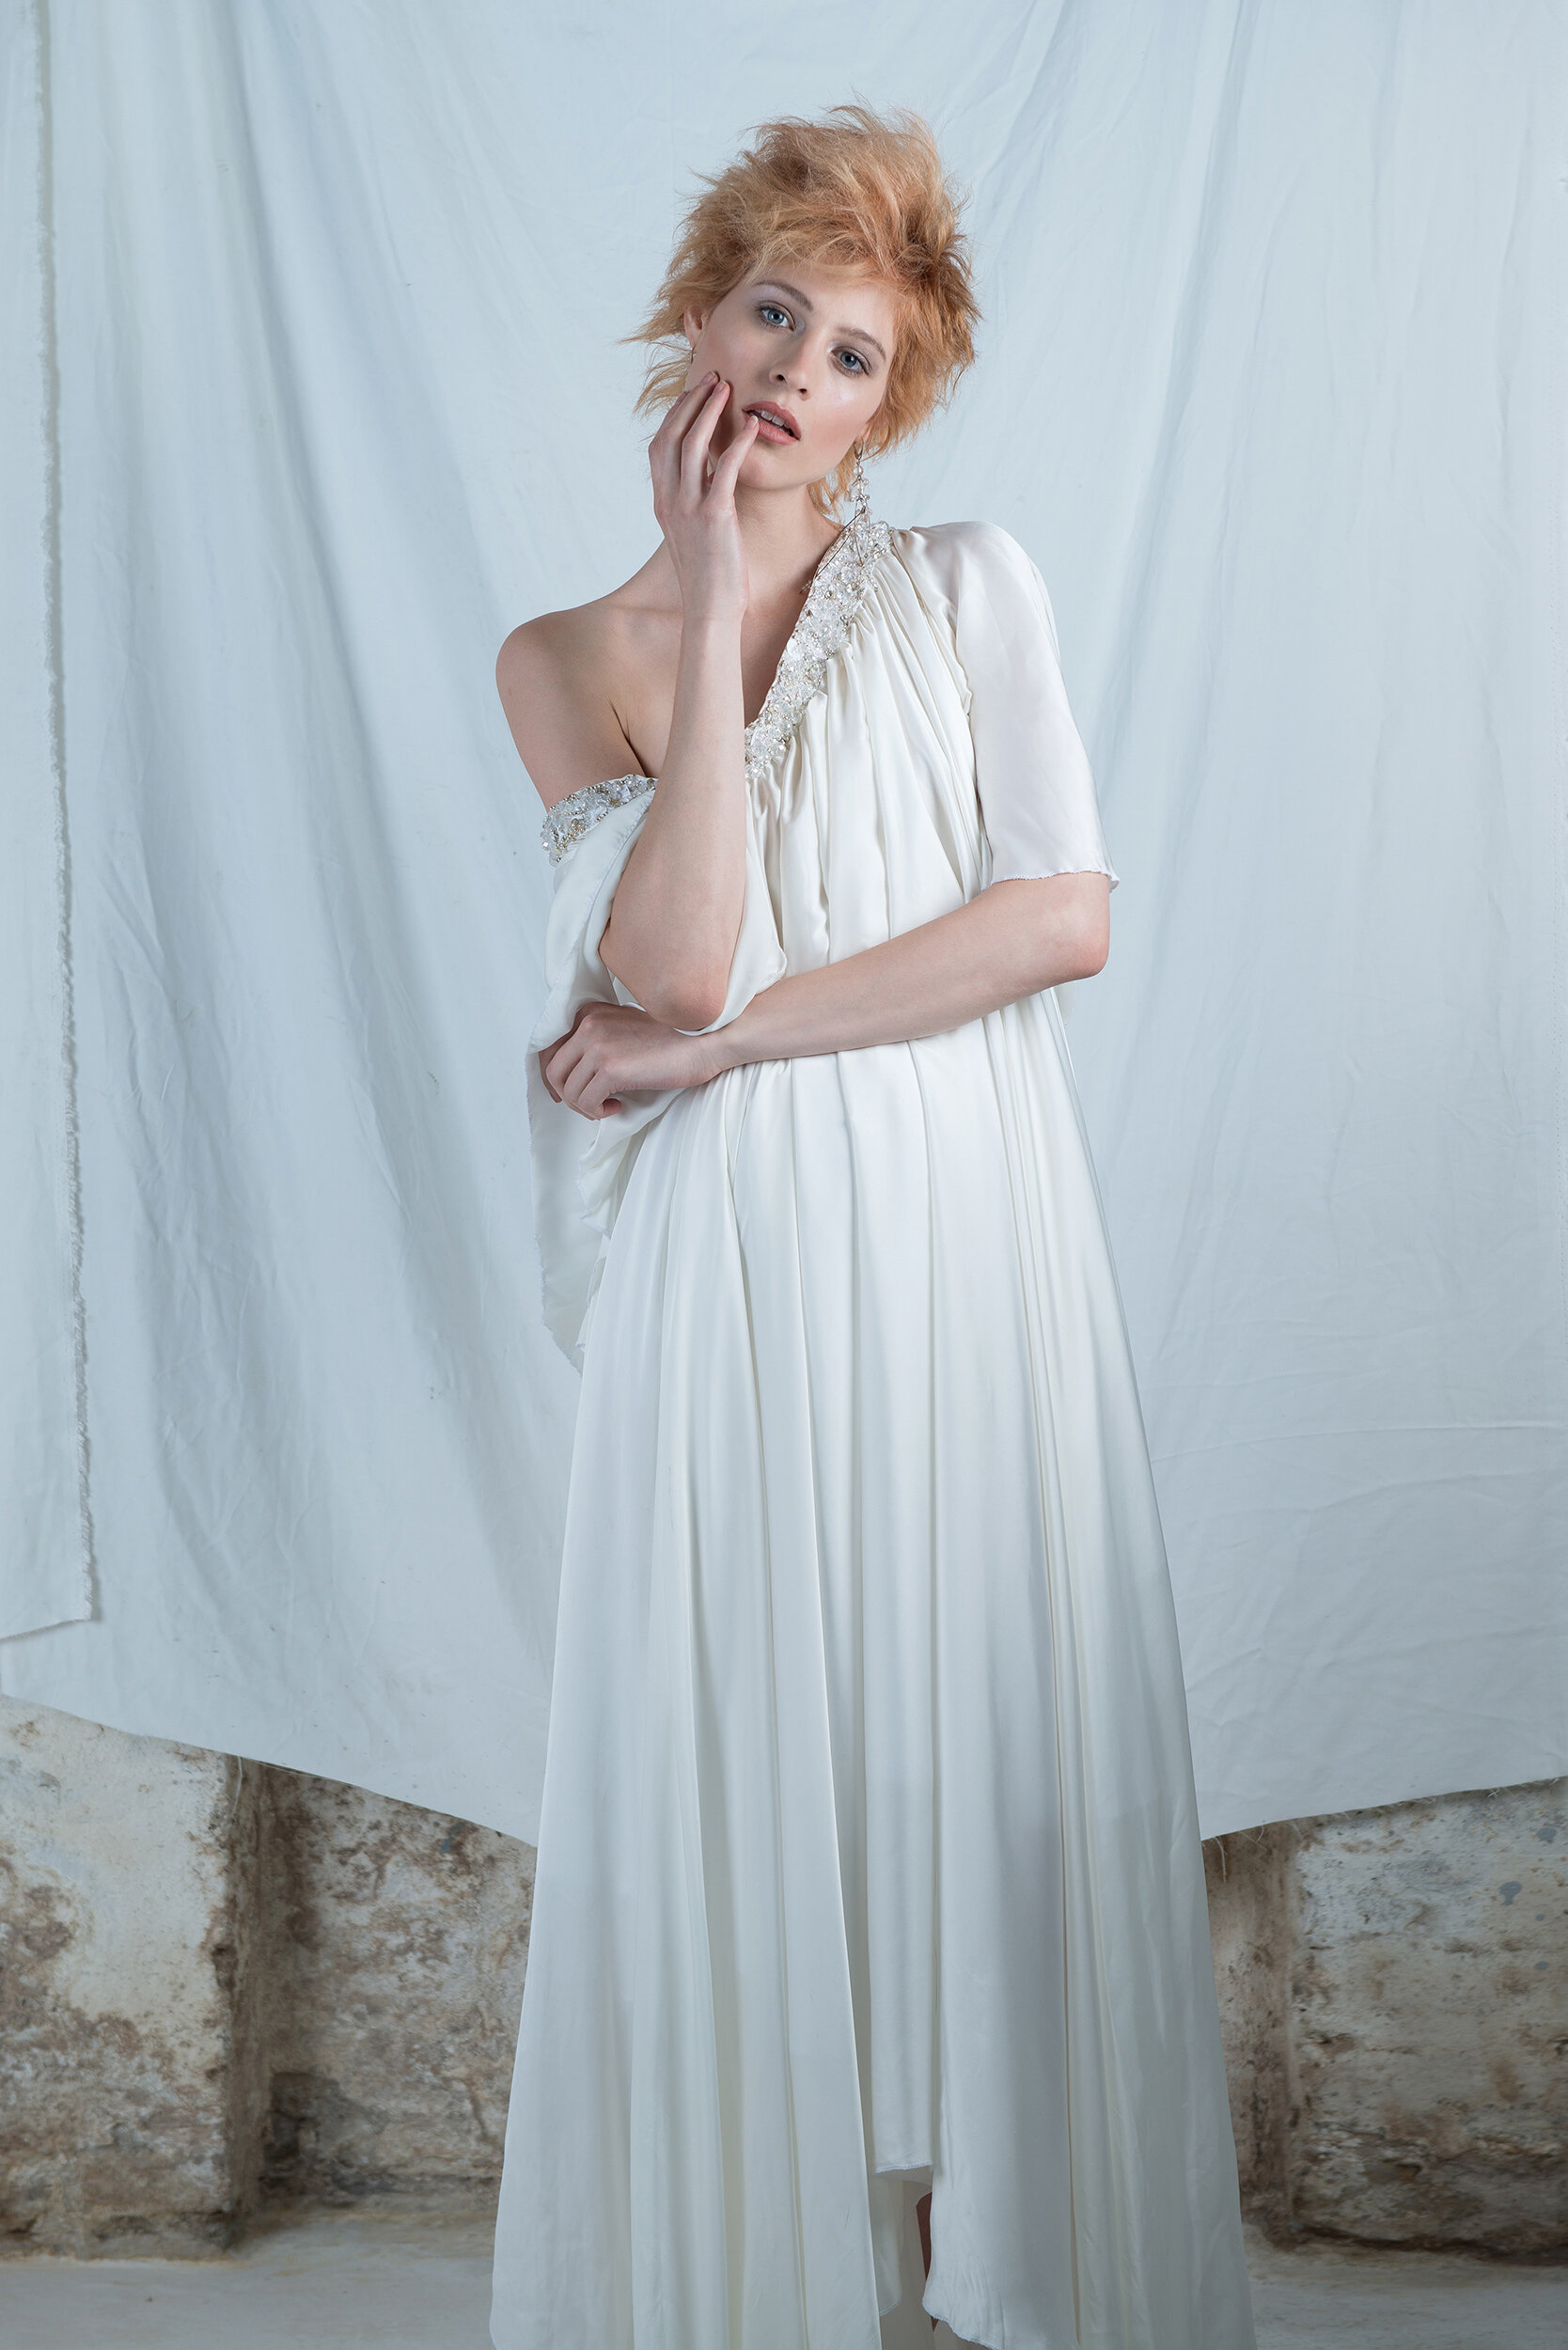 Florentina_white_dress_web_11.jpg